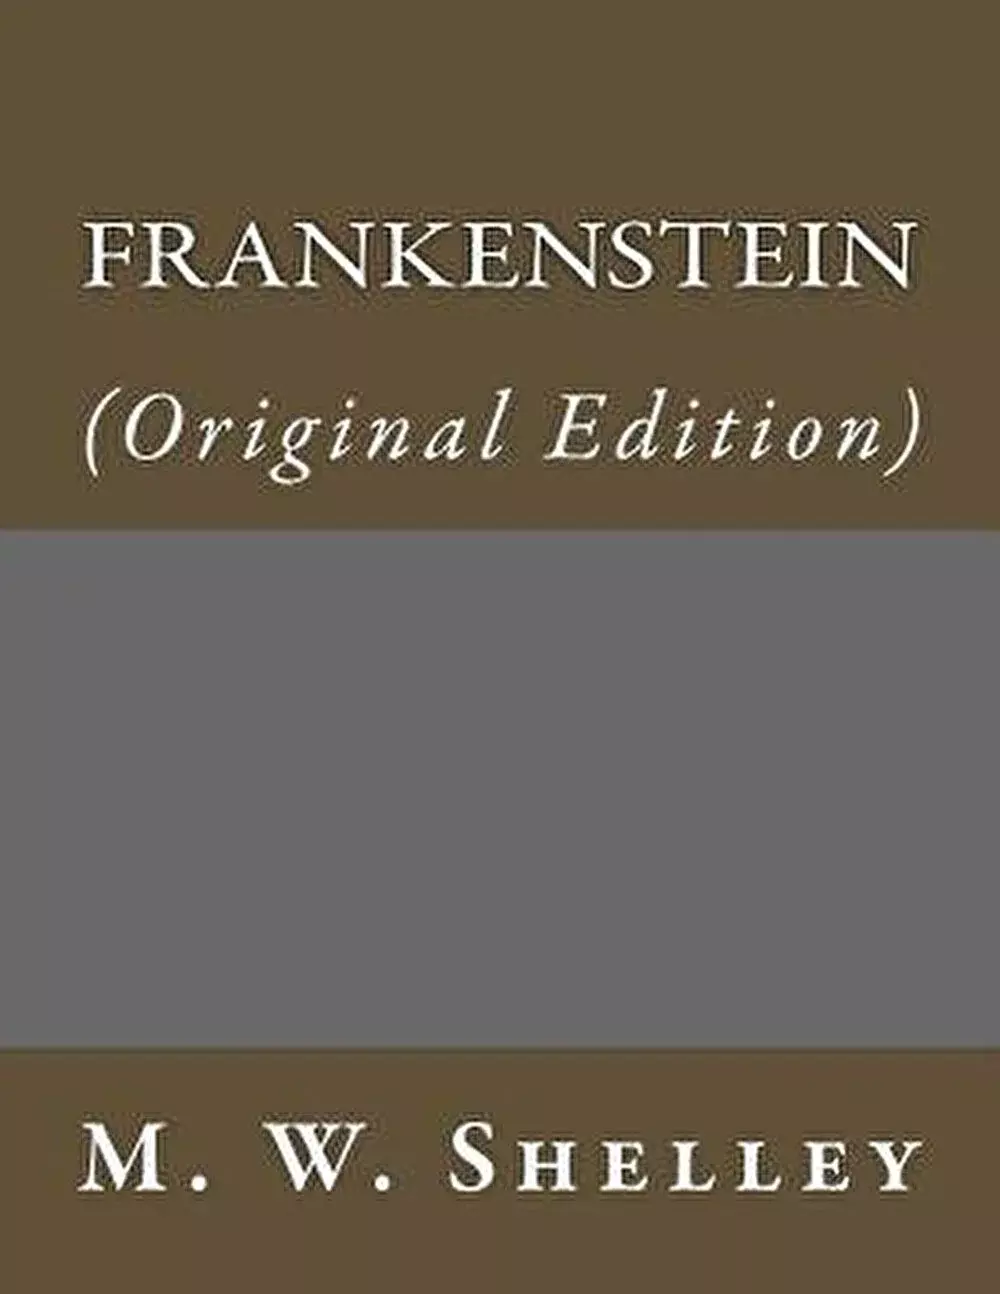 Frankenstein -Mary Shelley (1818)